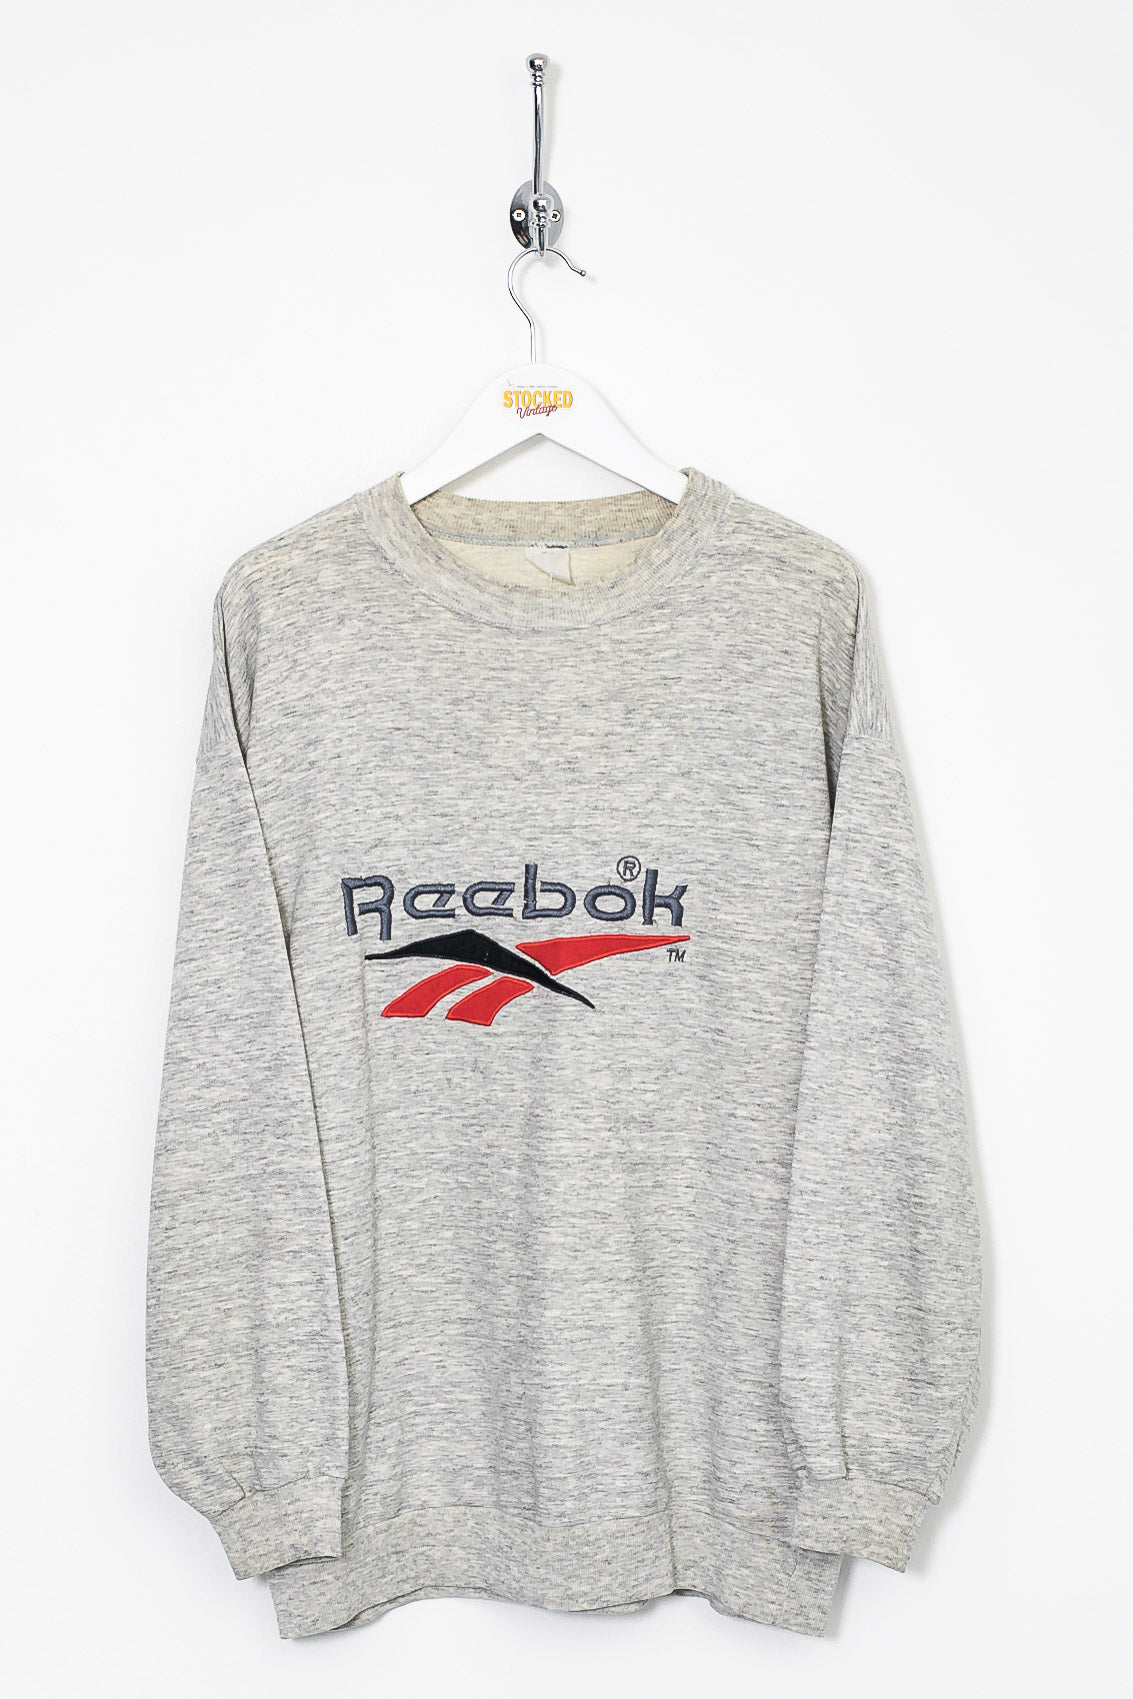 Reebok Sweatshirt (S)